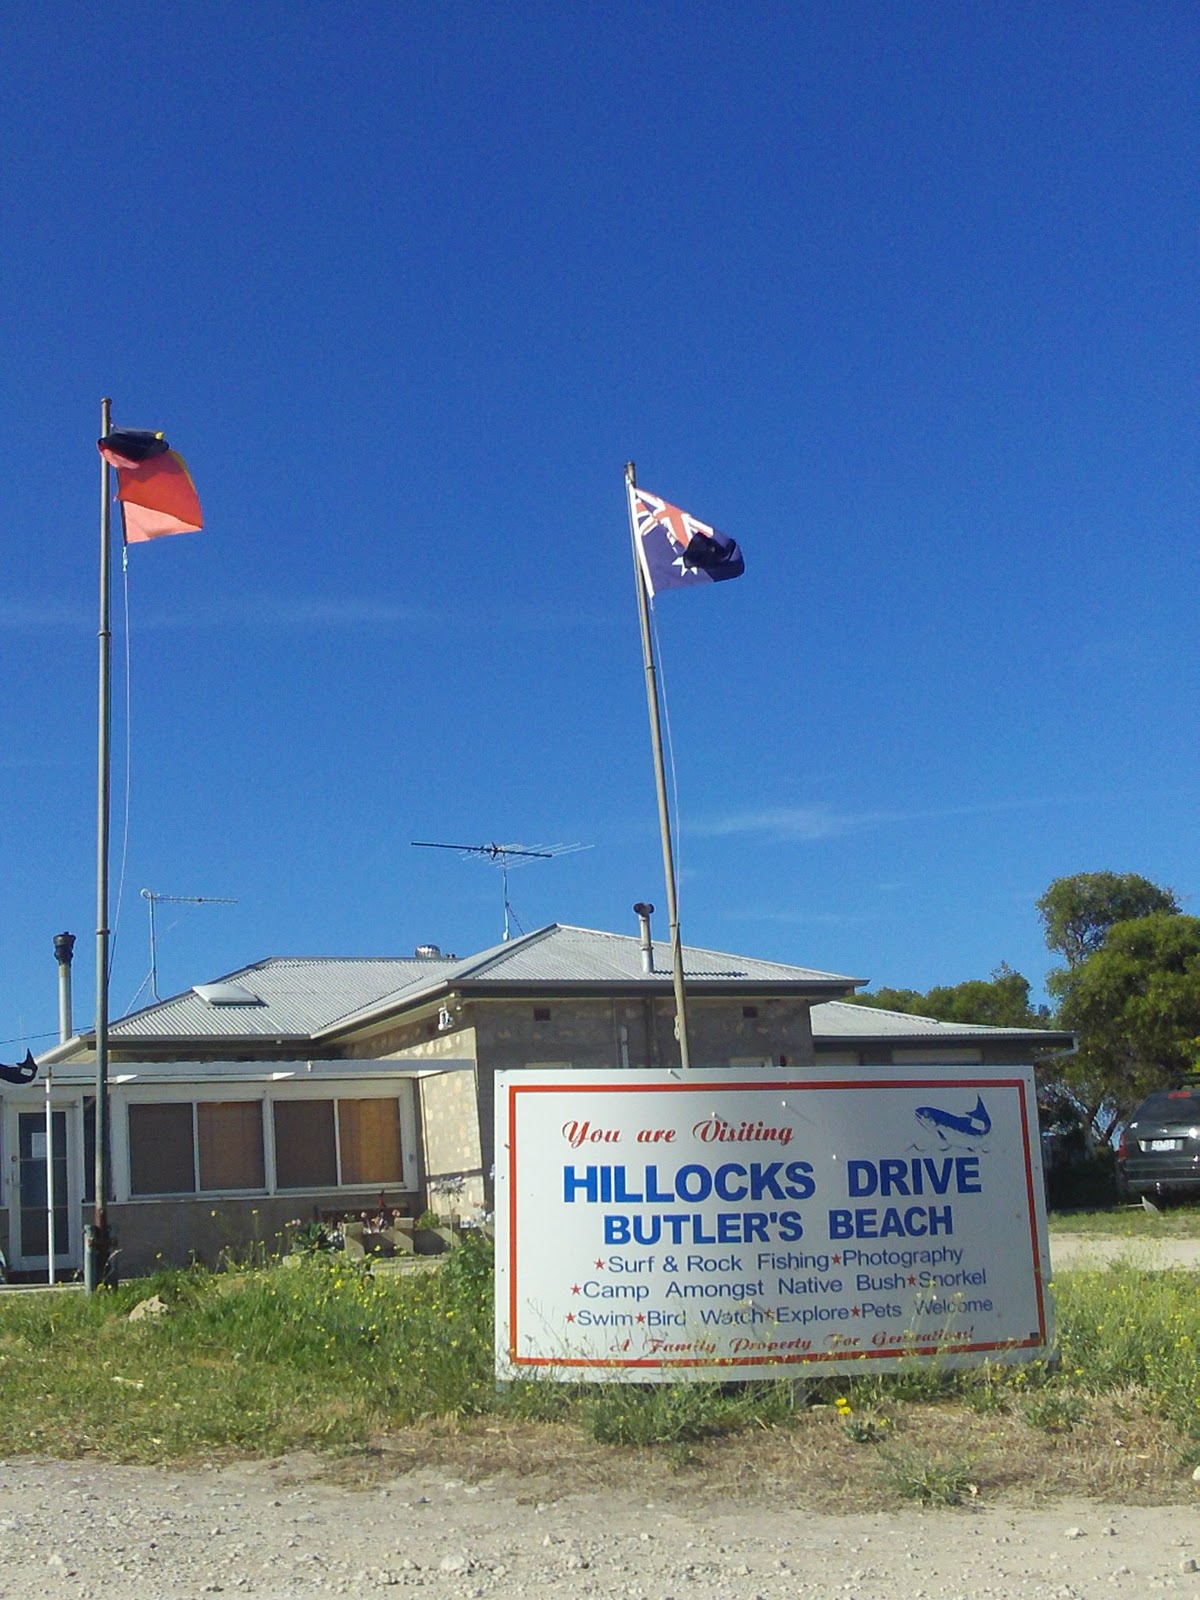 Hillock Homestead